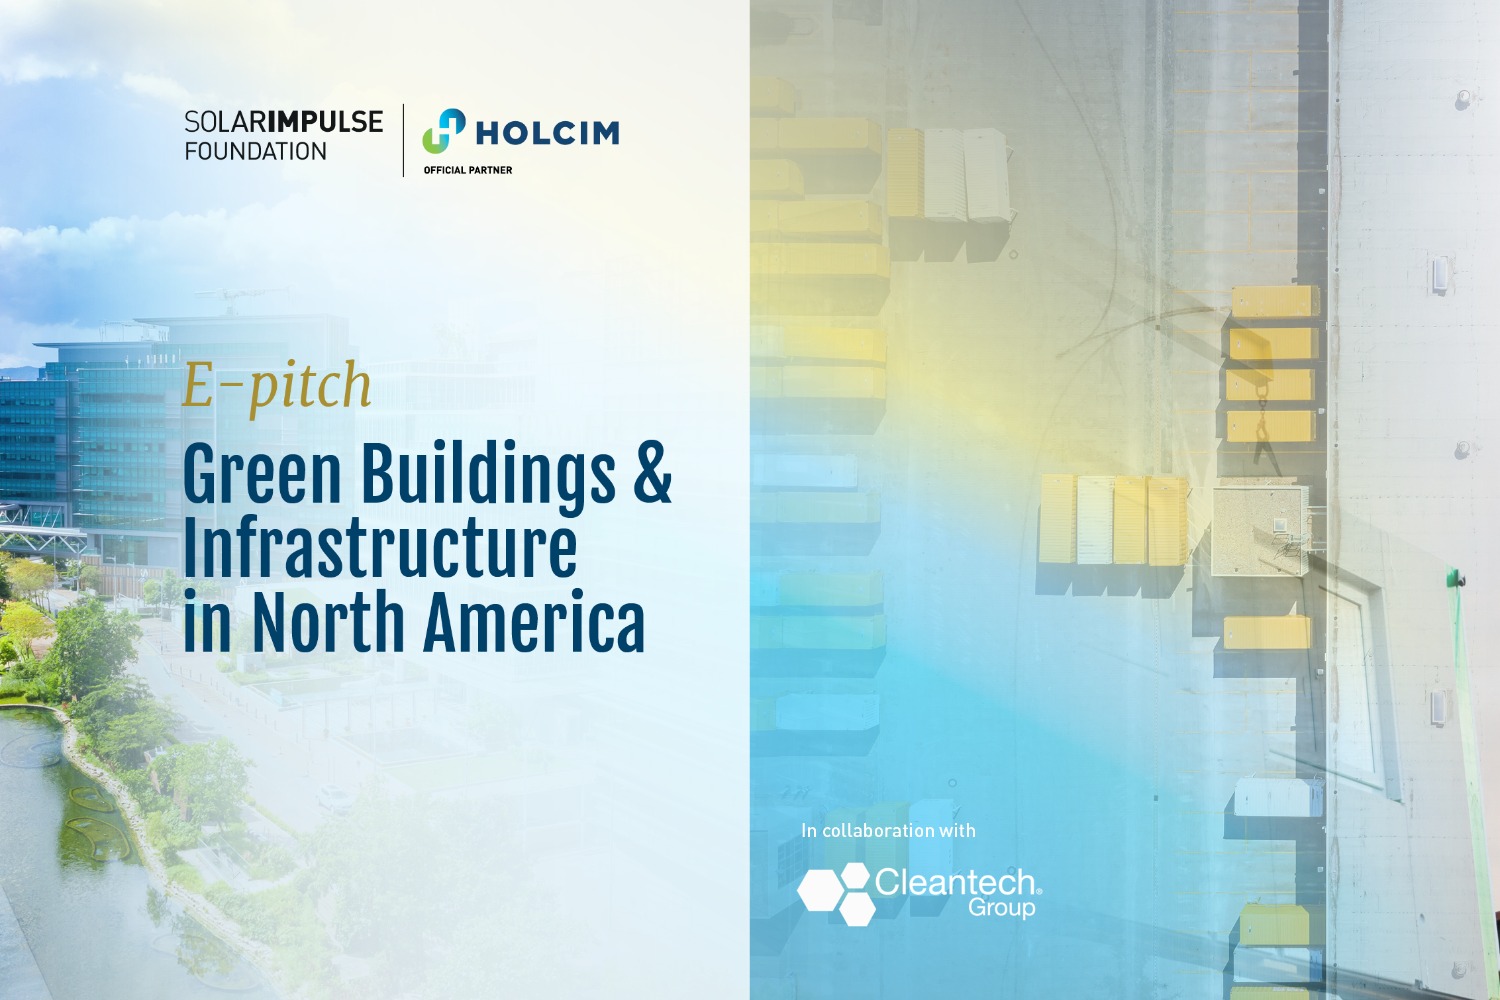 E-Pitch Solar Impulse Investment - "Grüne Gebäude und Infrastruktur in Nordamerika" - SIF x Cleantech Group